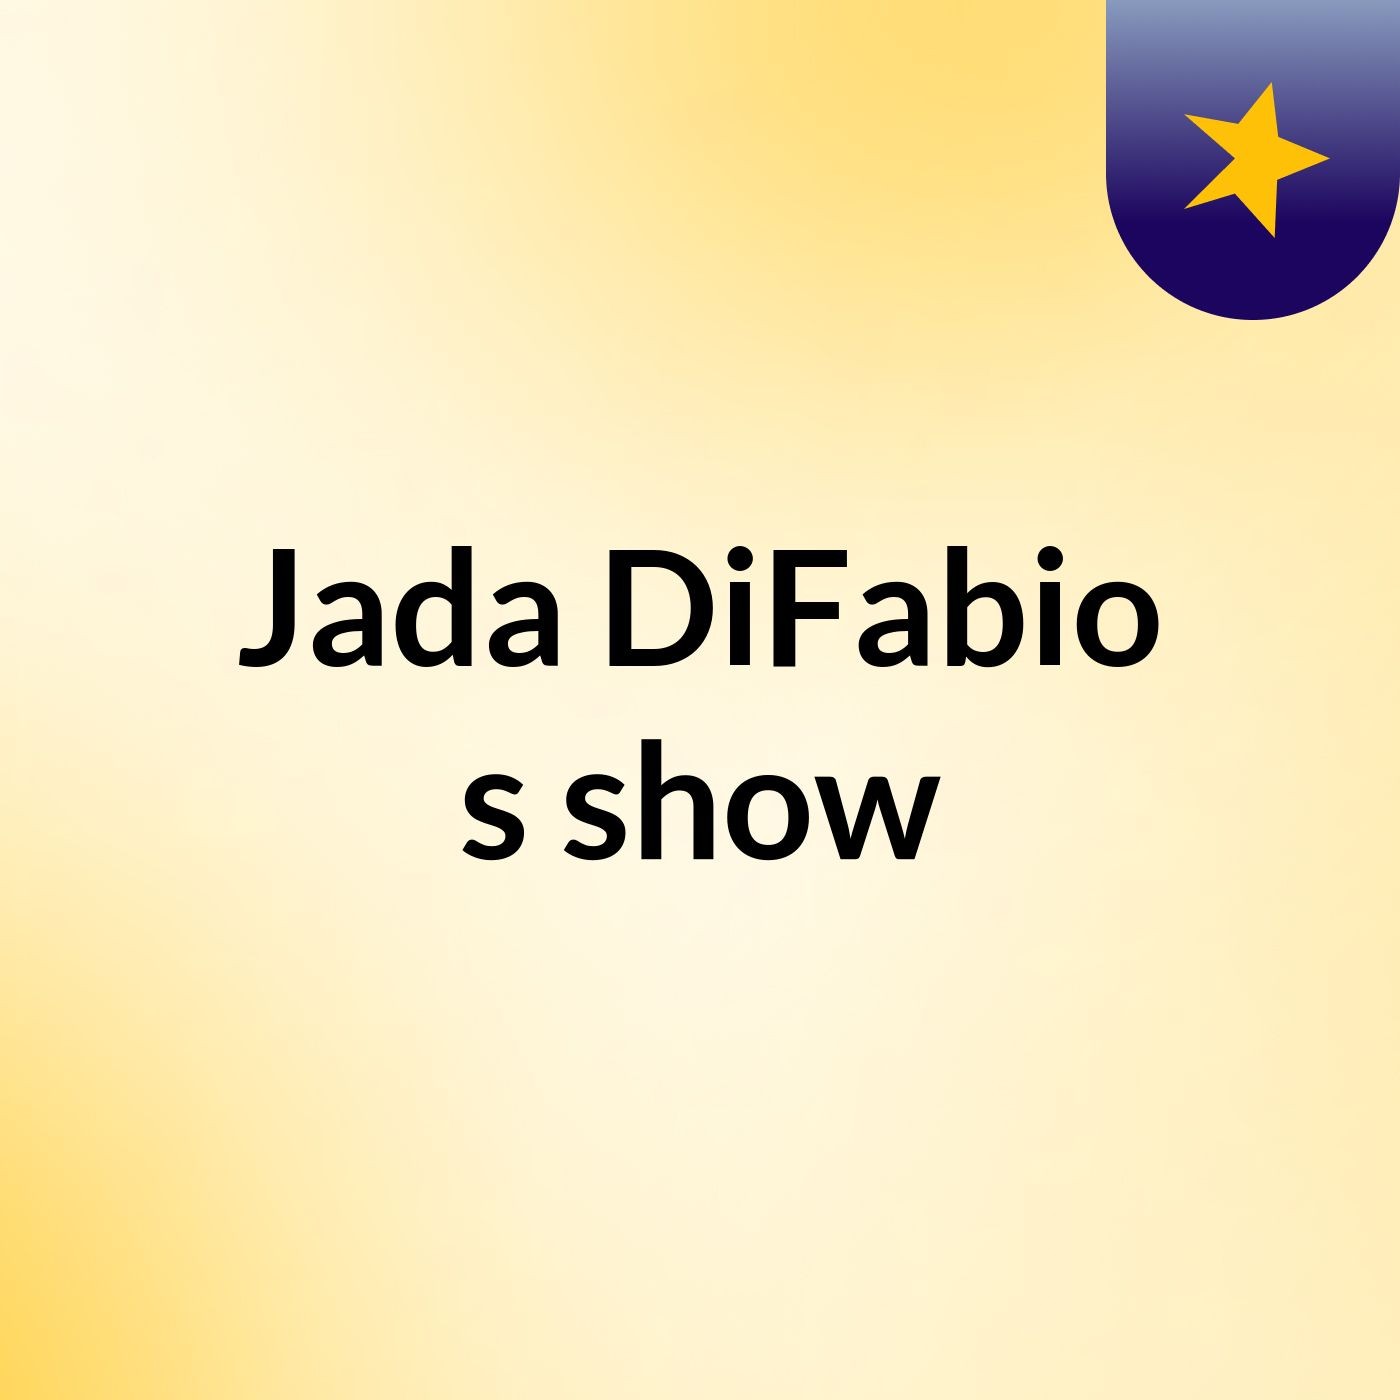 Jada DiFabio's show